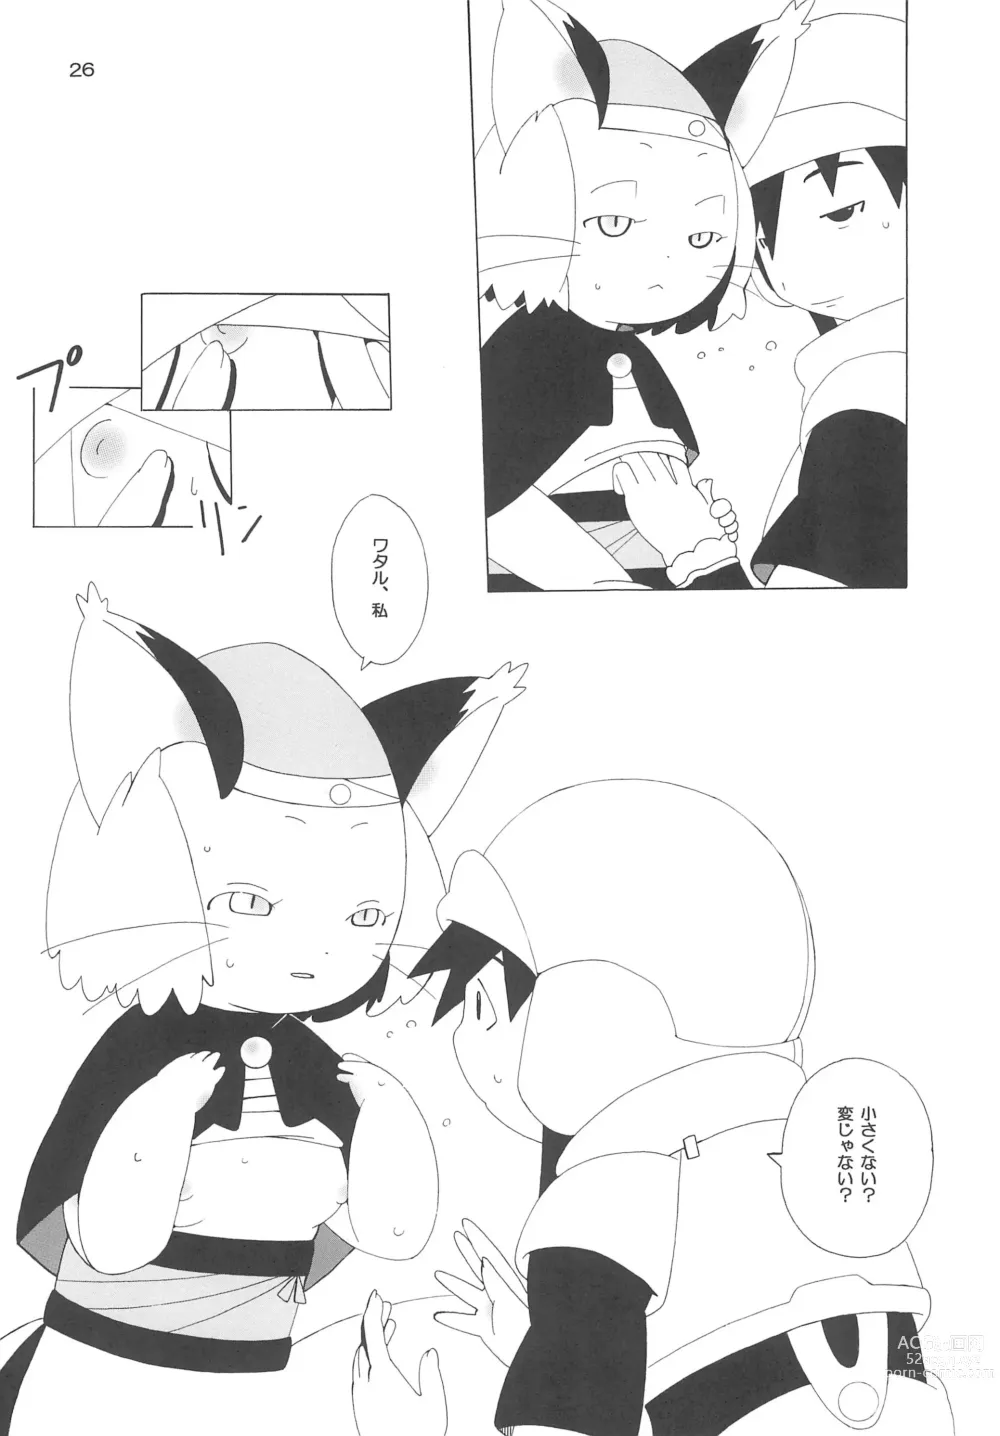 Page 26 of doujinshi Watamii!